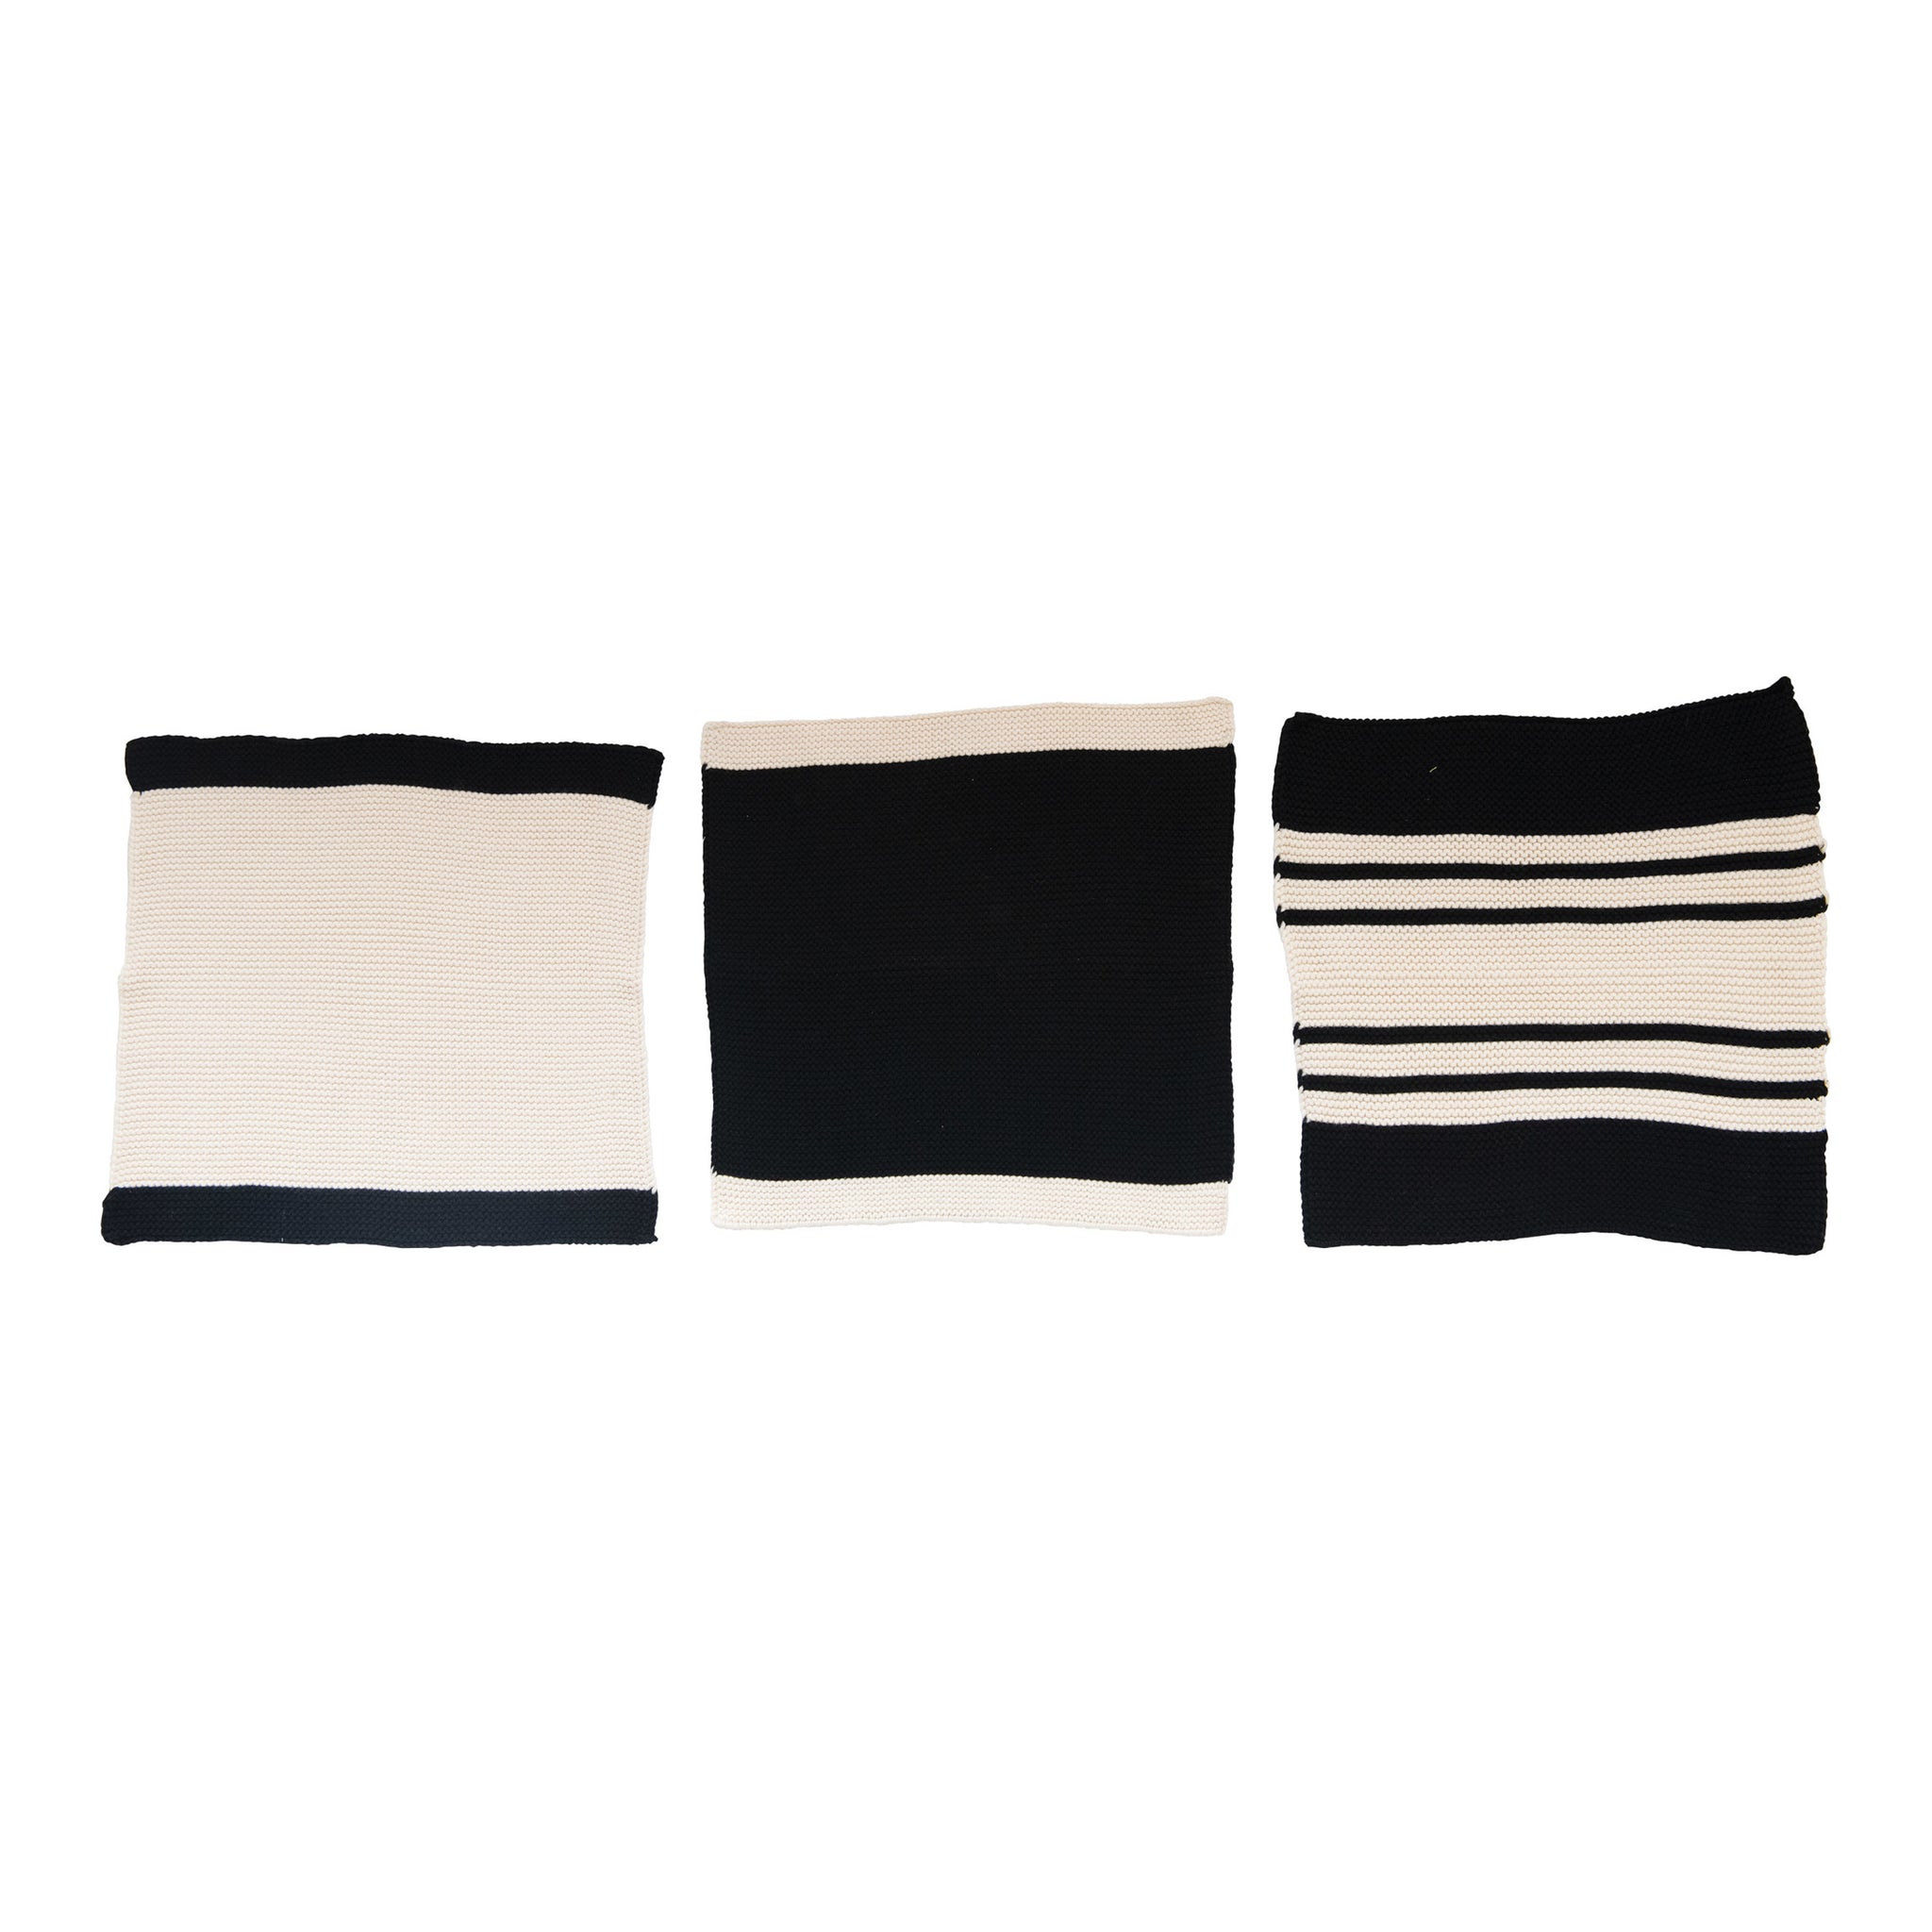 Black and Cream Striped Cotton Knit Dish Cloth Set